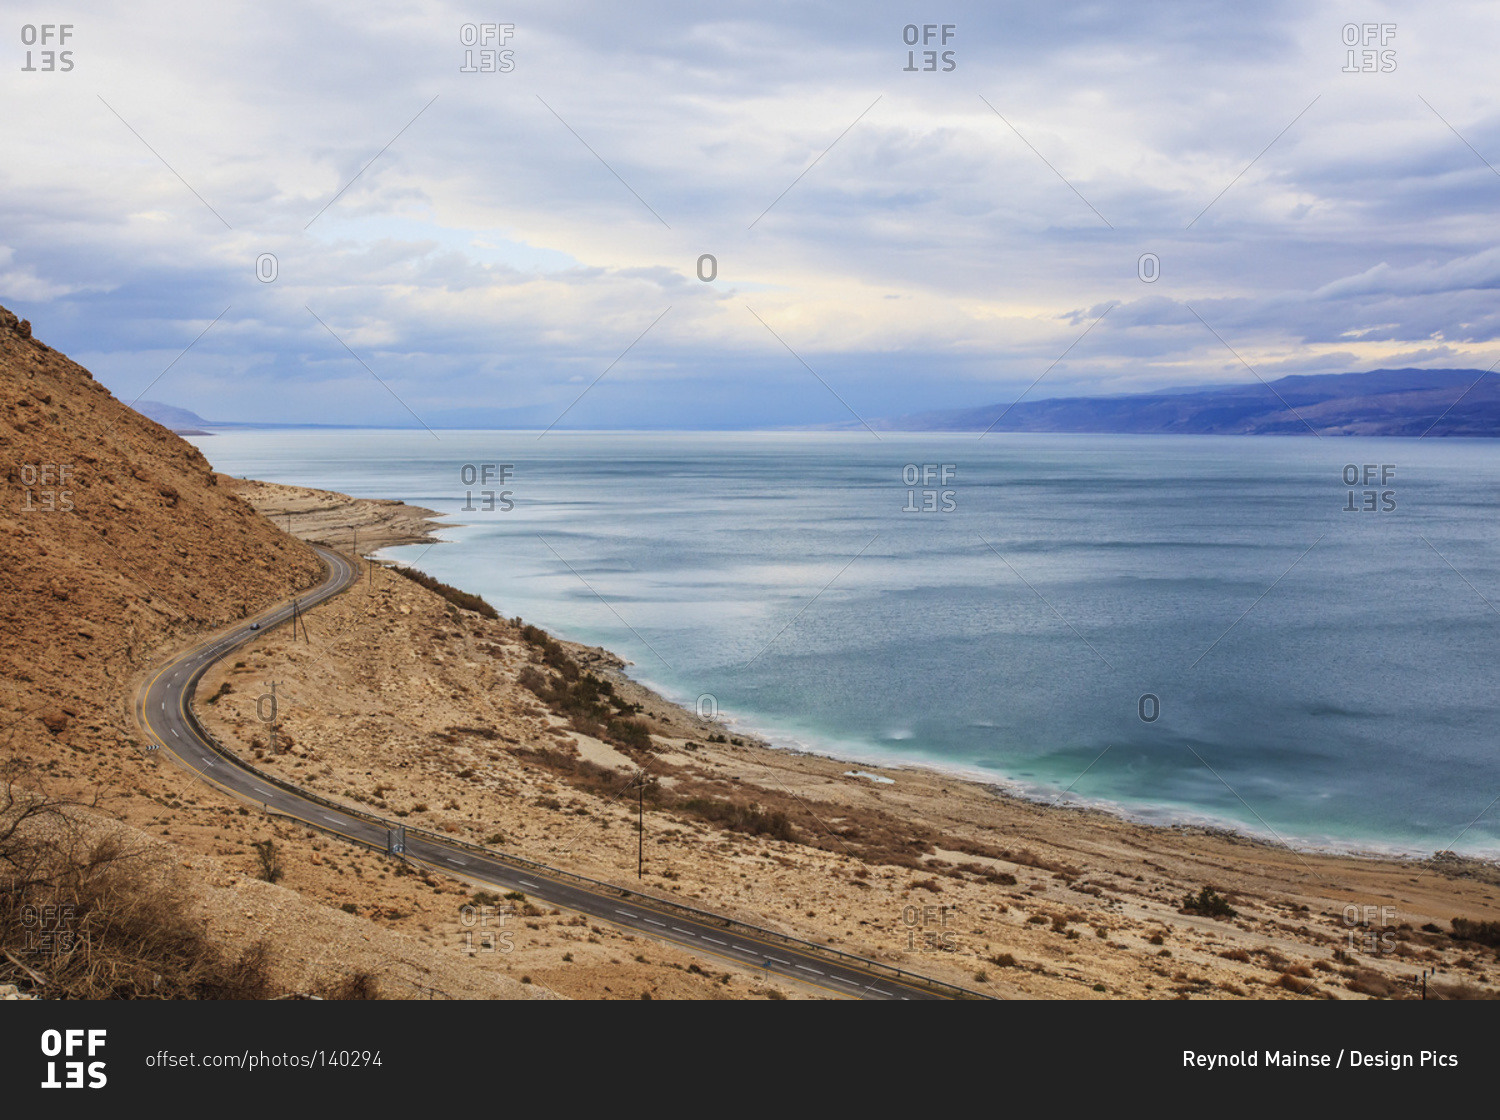 Road along the dead sea, Jordan Valley, Israel